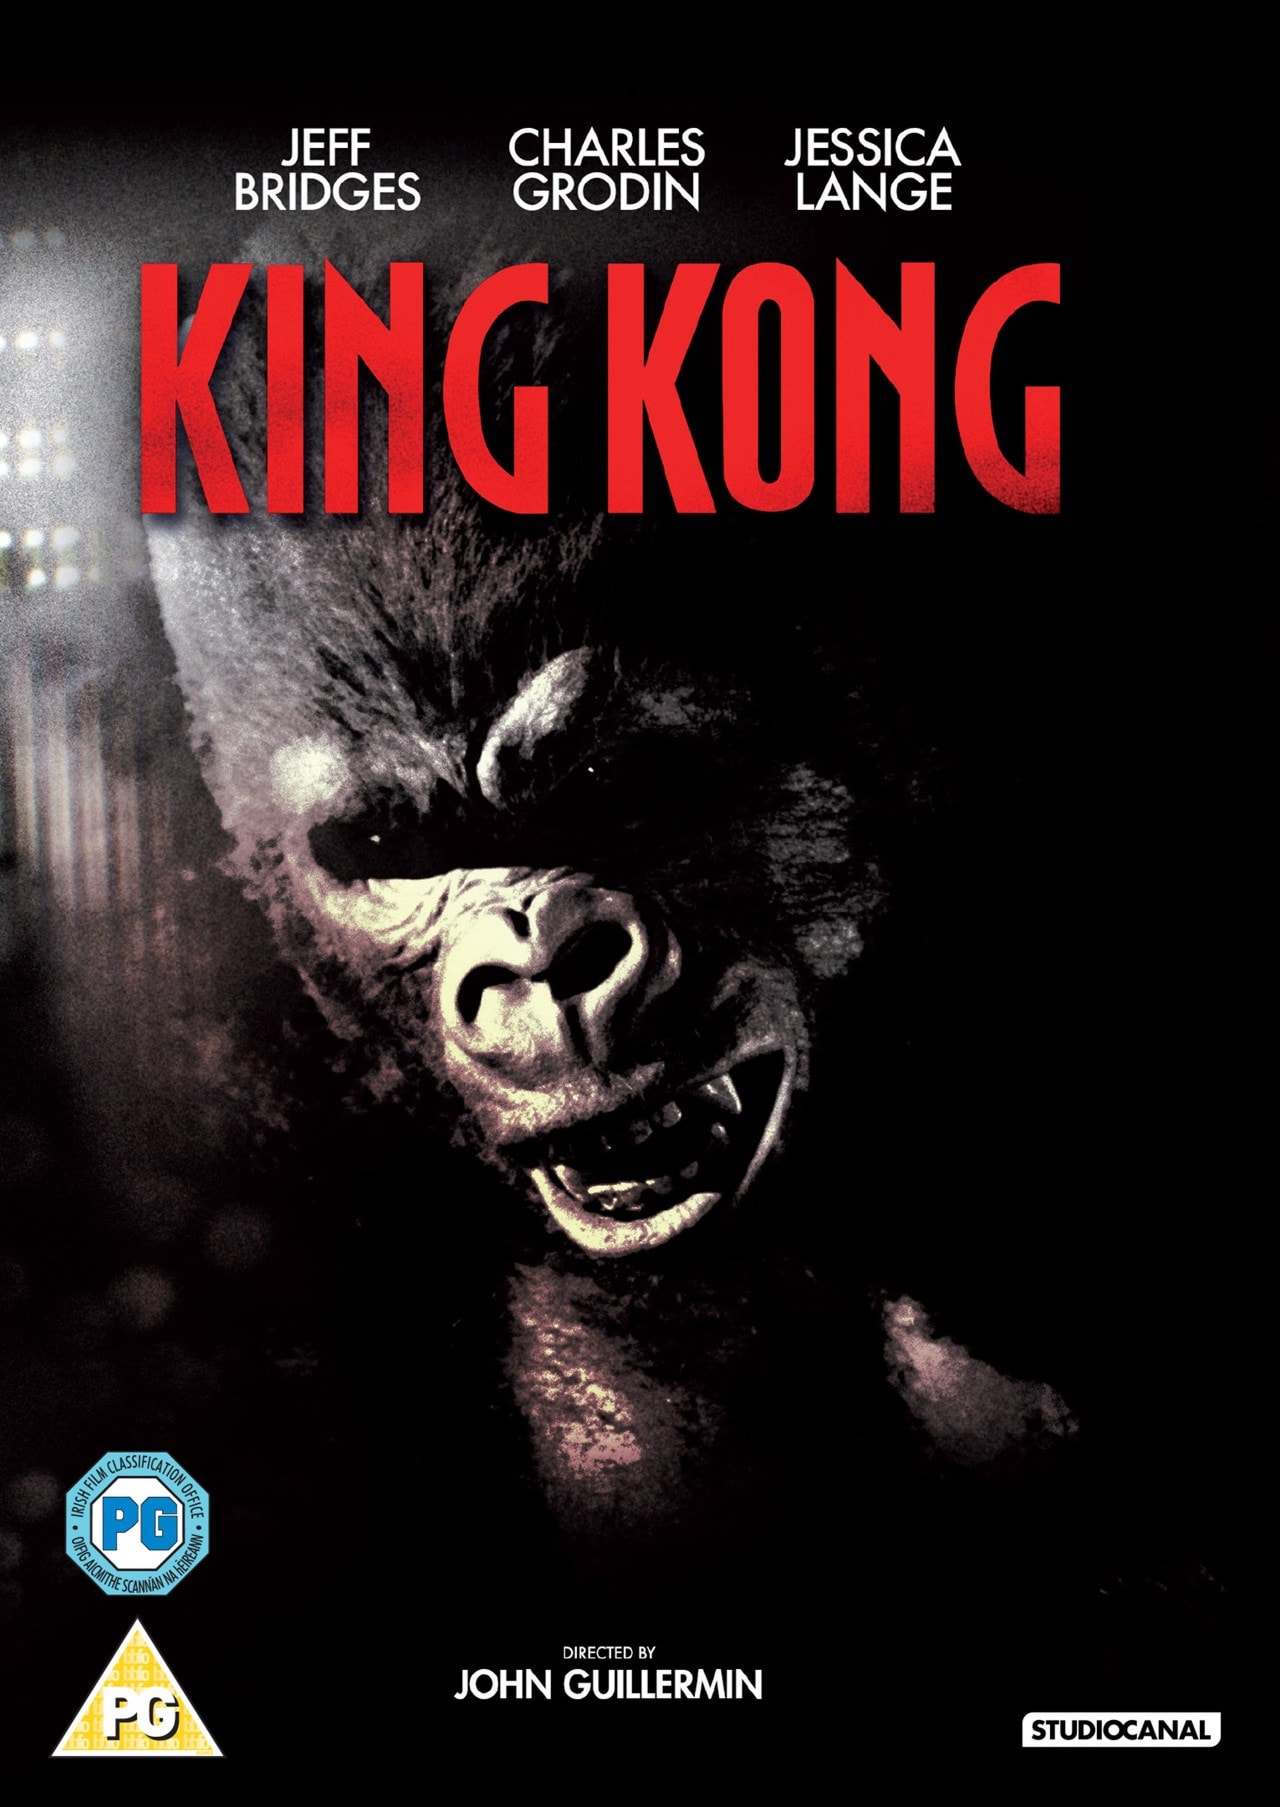 King Kong | DVD | Free shipping over £20 | HMV Store